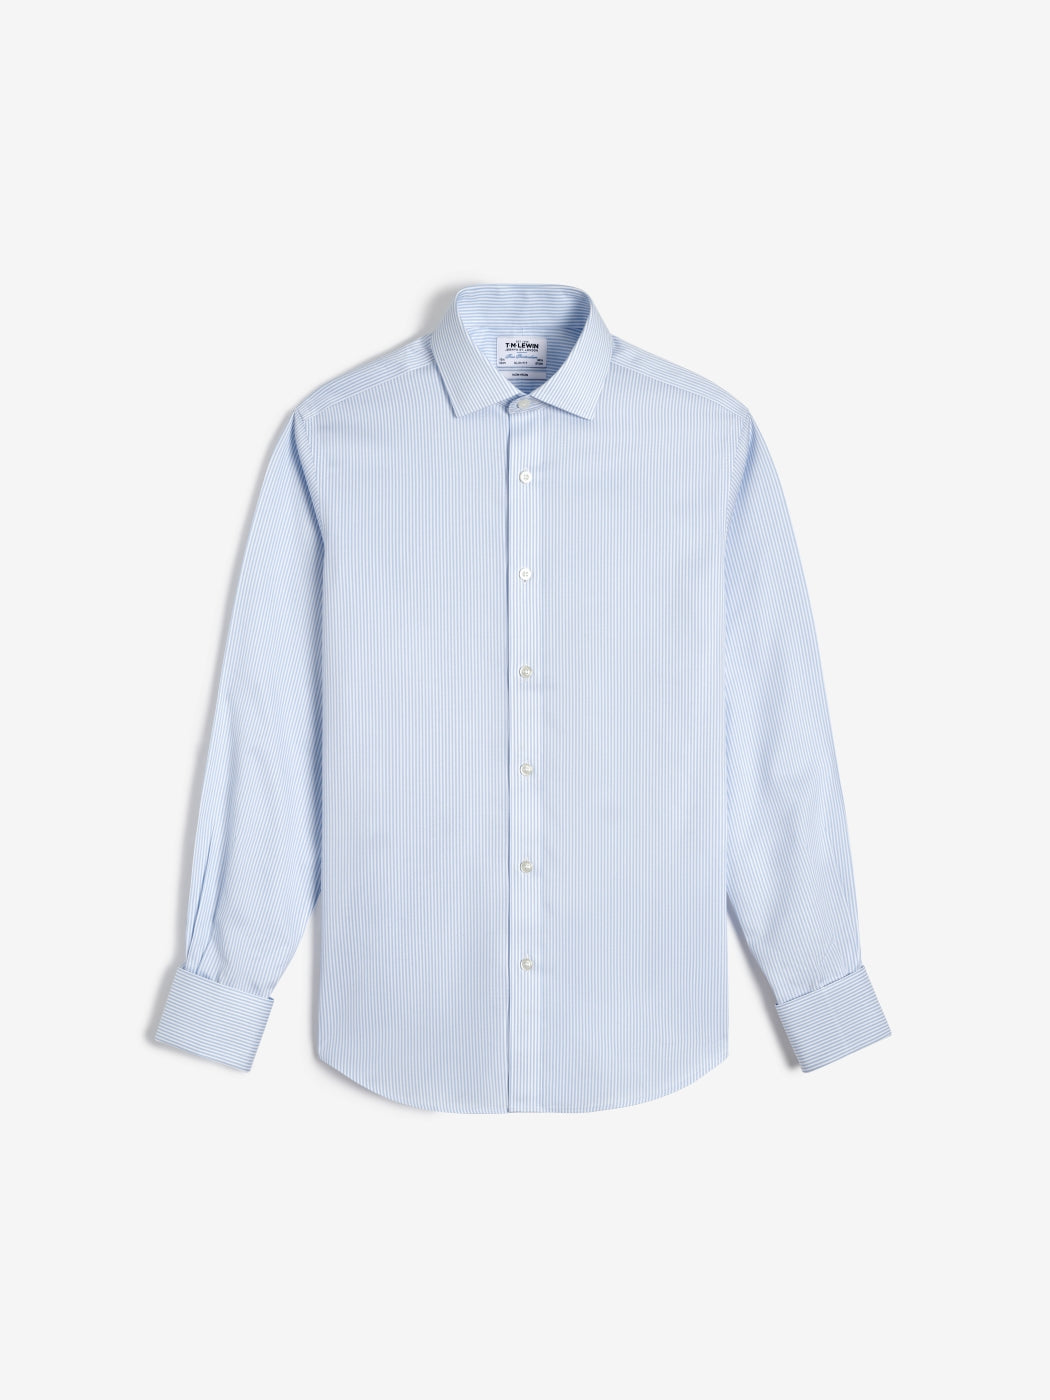 Image 3 of Non-Iron Light Blue Narrow Stripe Twill Slim Fit Double Cuff Classic Collar Shirt